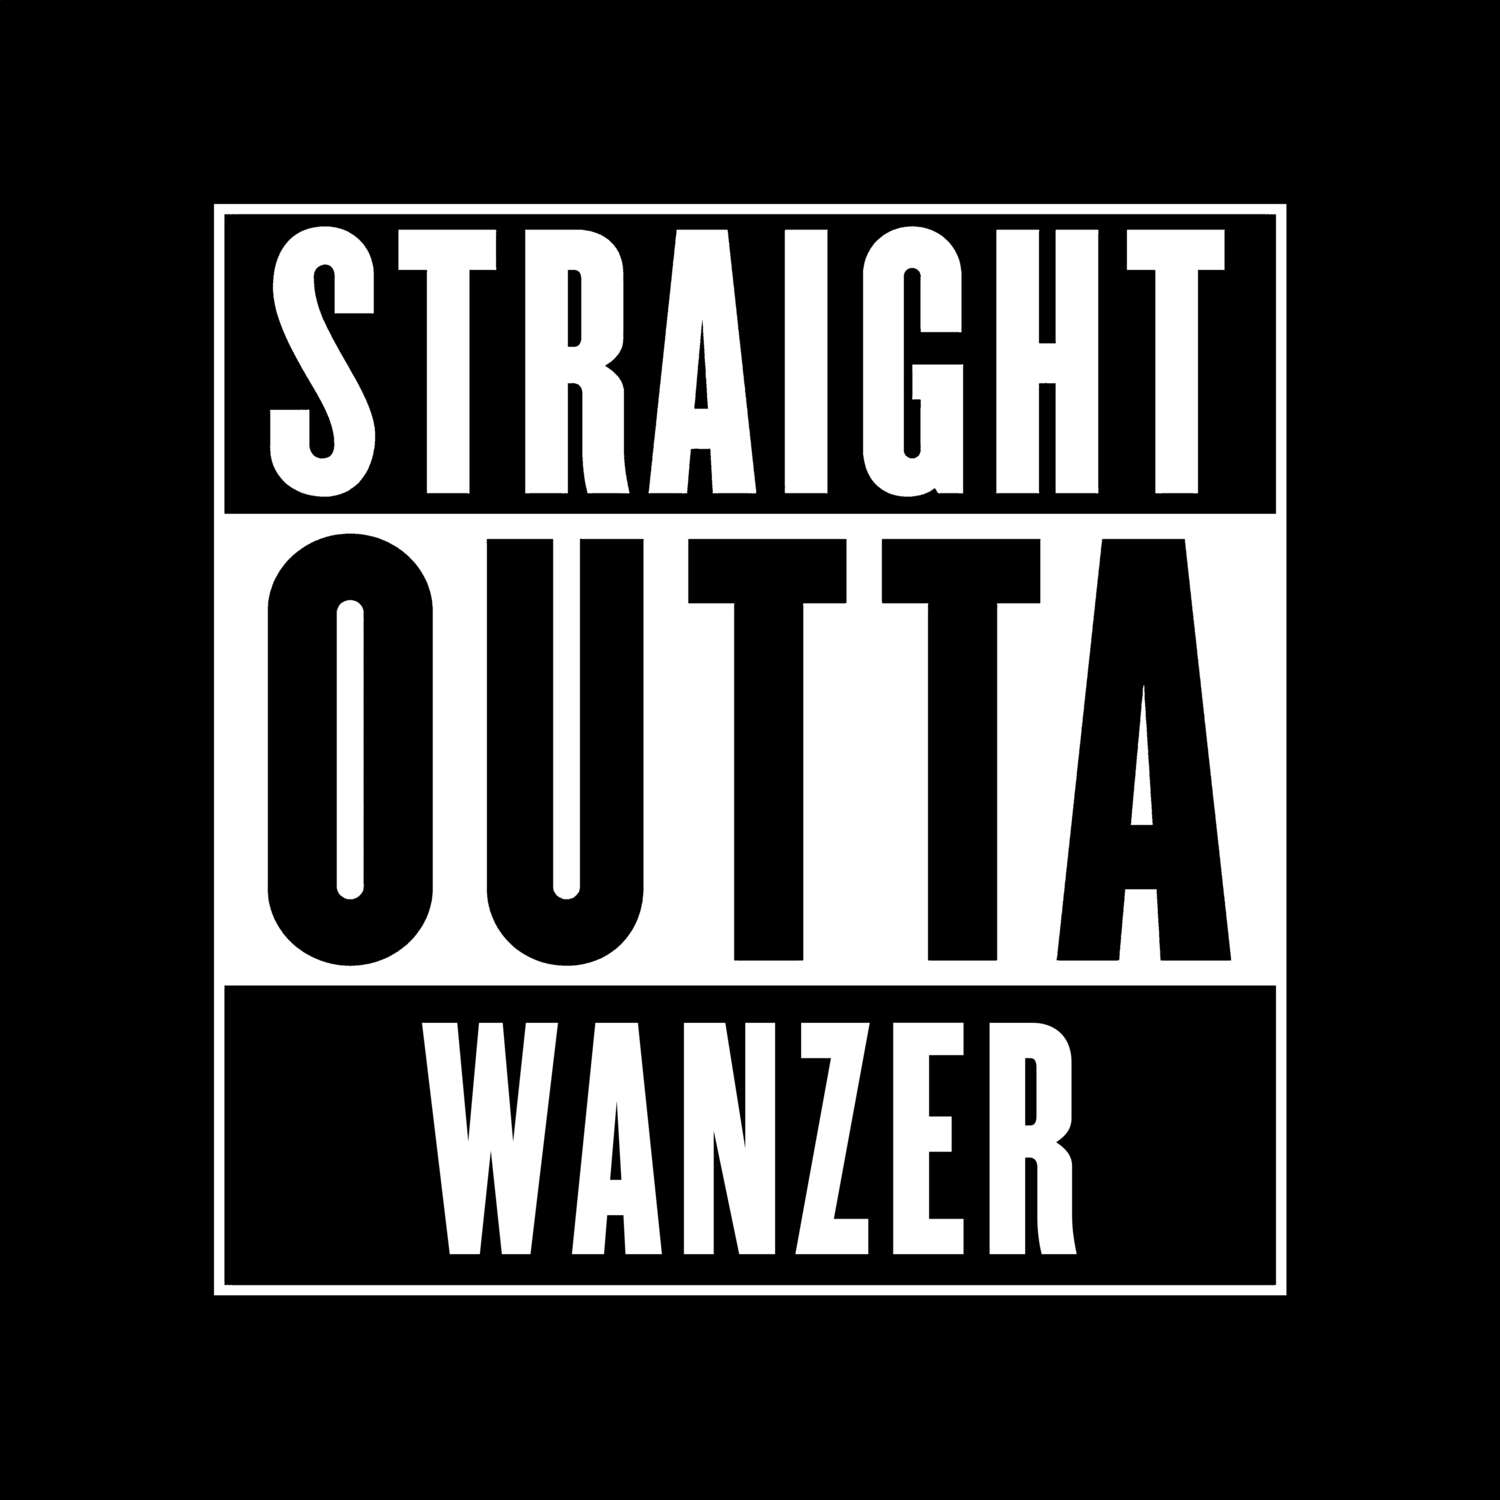 Wanzer T-Shirt »Straight Outta«